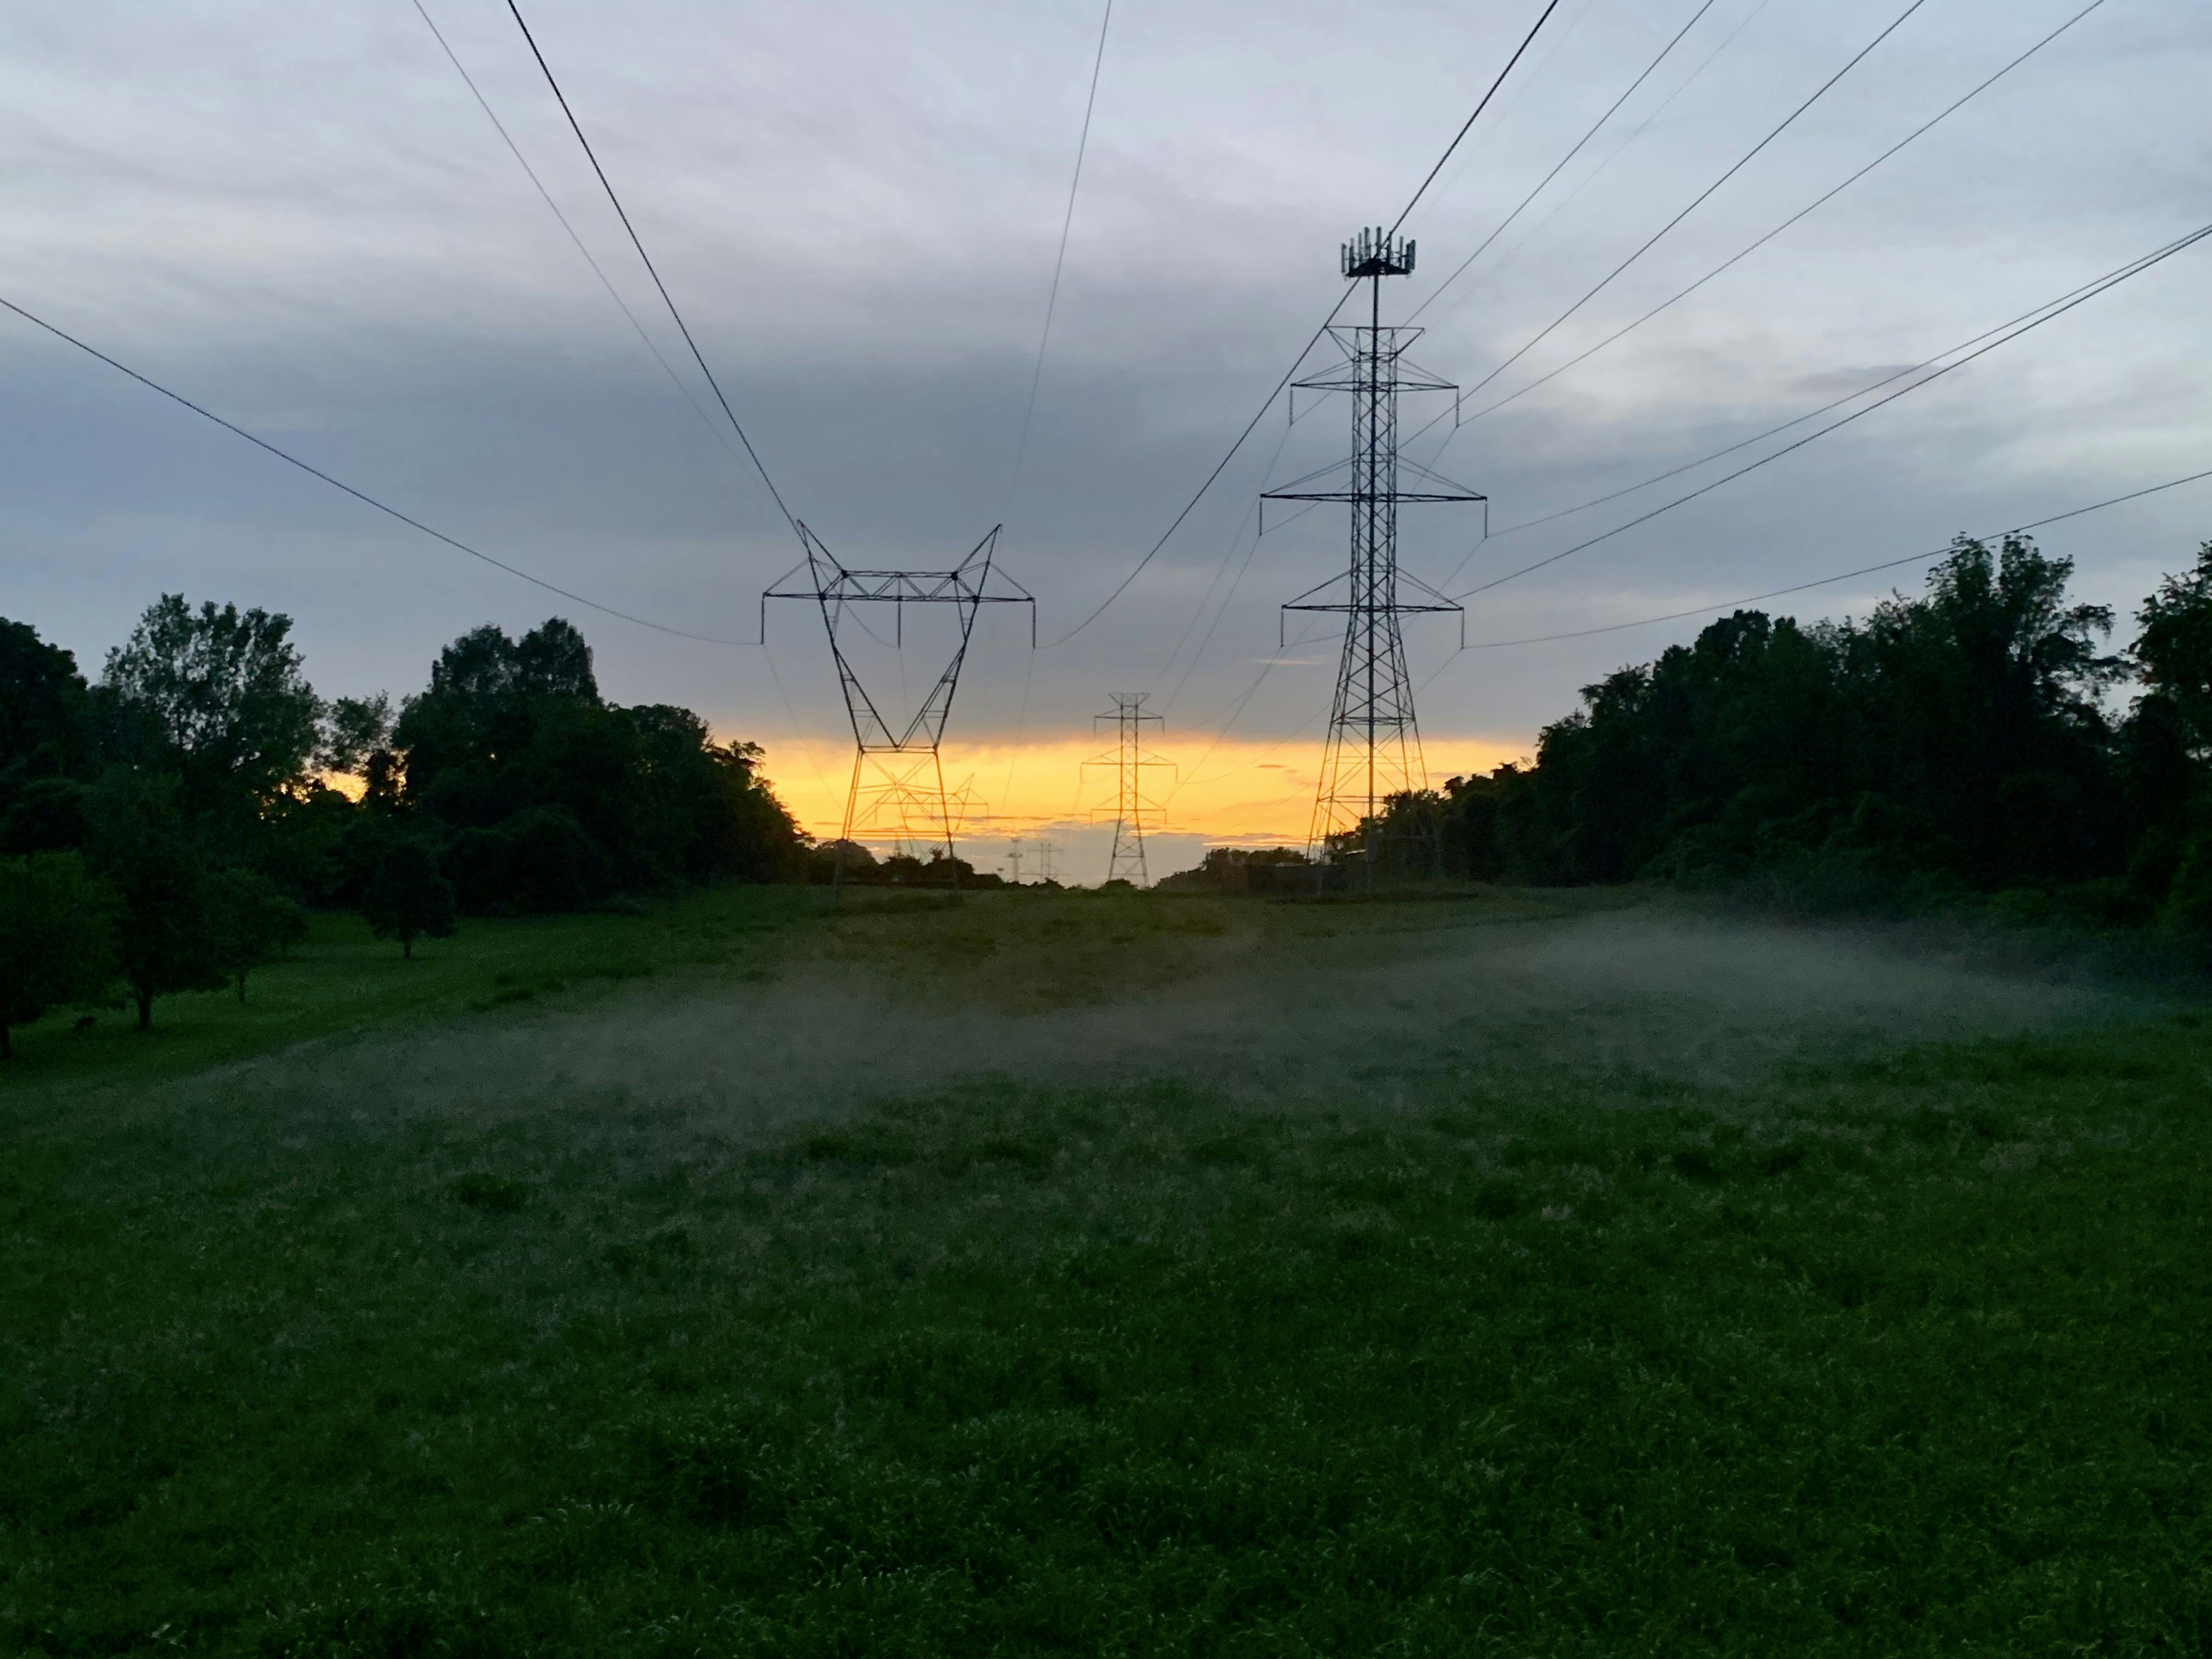 Fog settling on a field under power lines